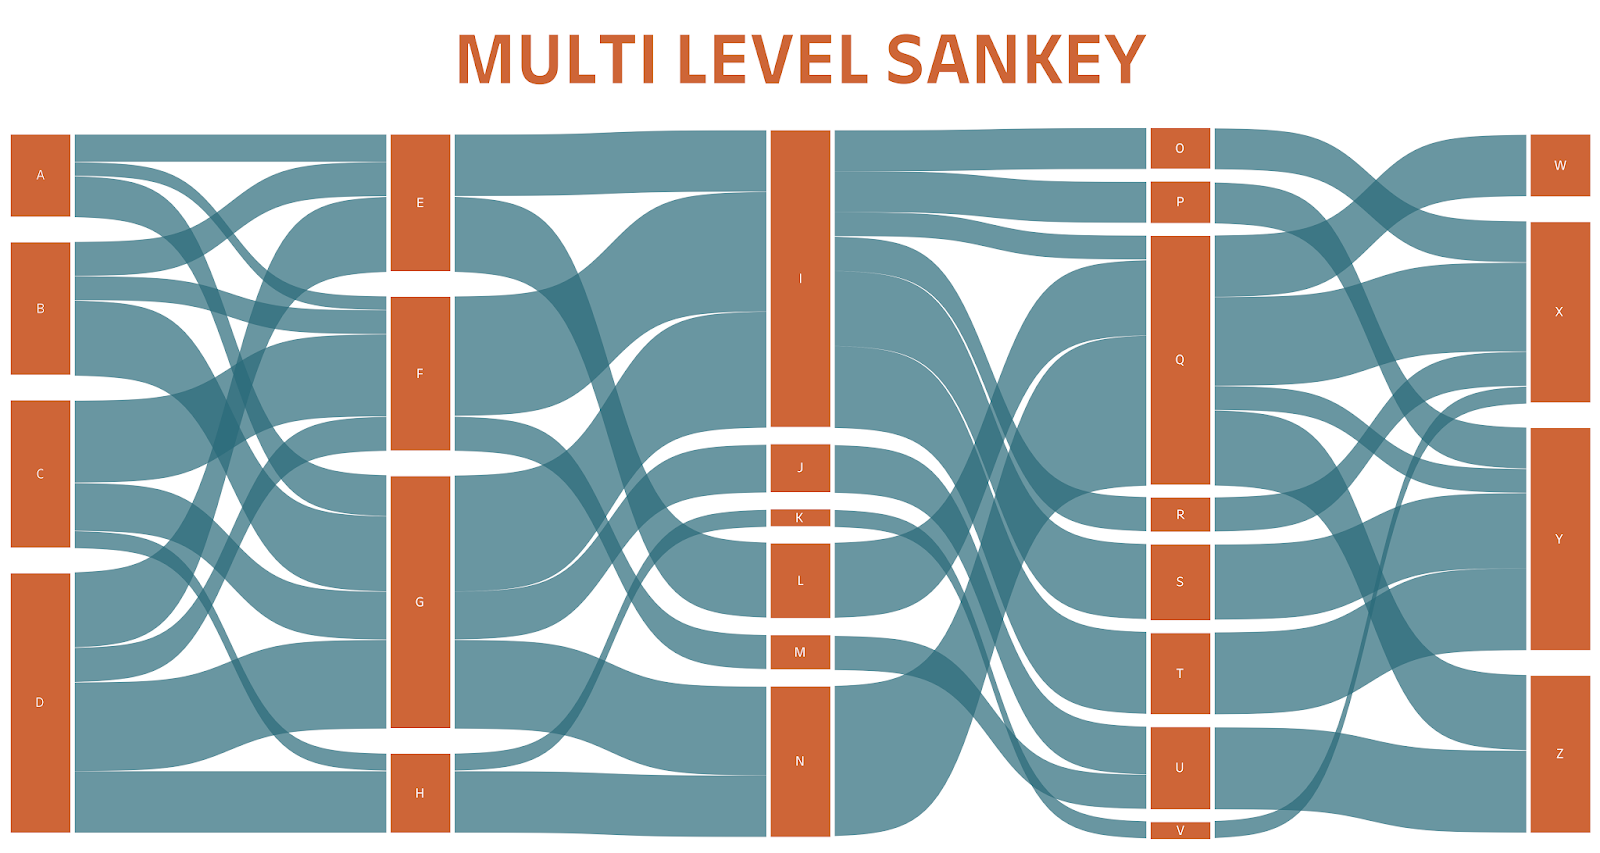 Tableau Sankey Chart